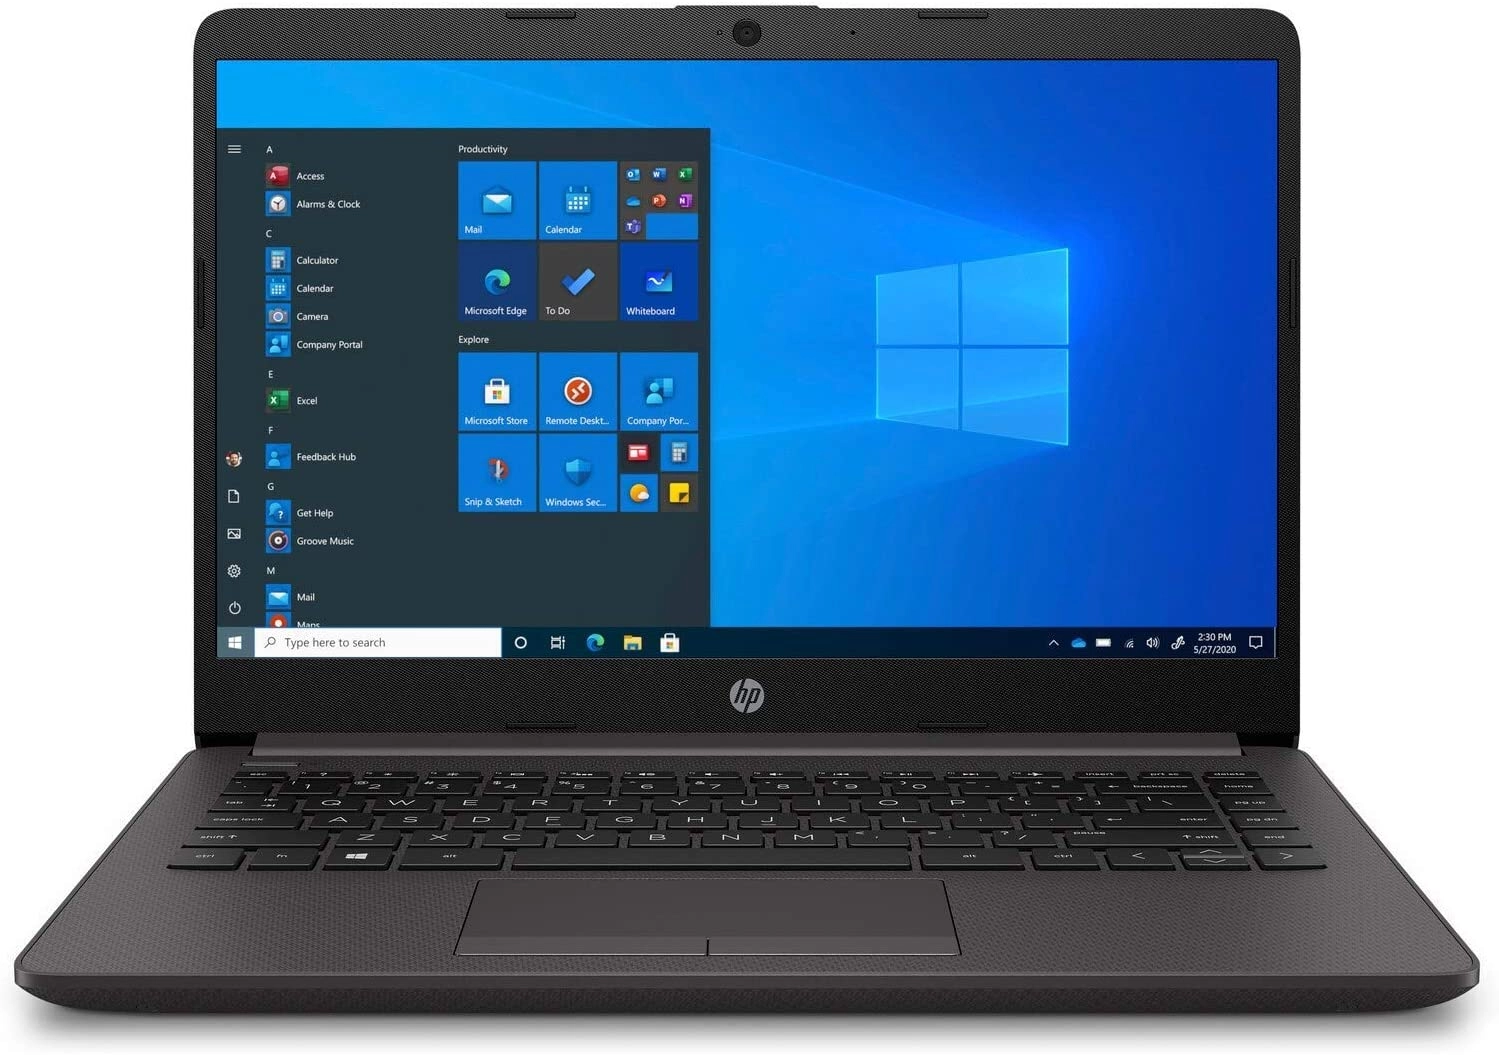 HP 27K32EA laptop image